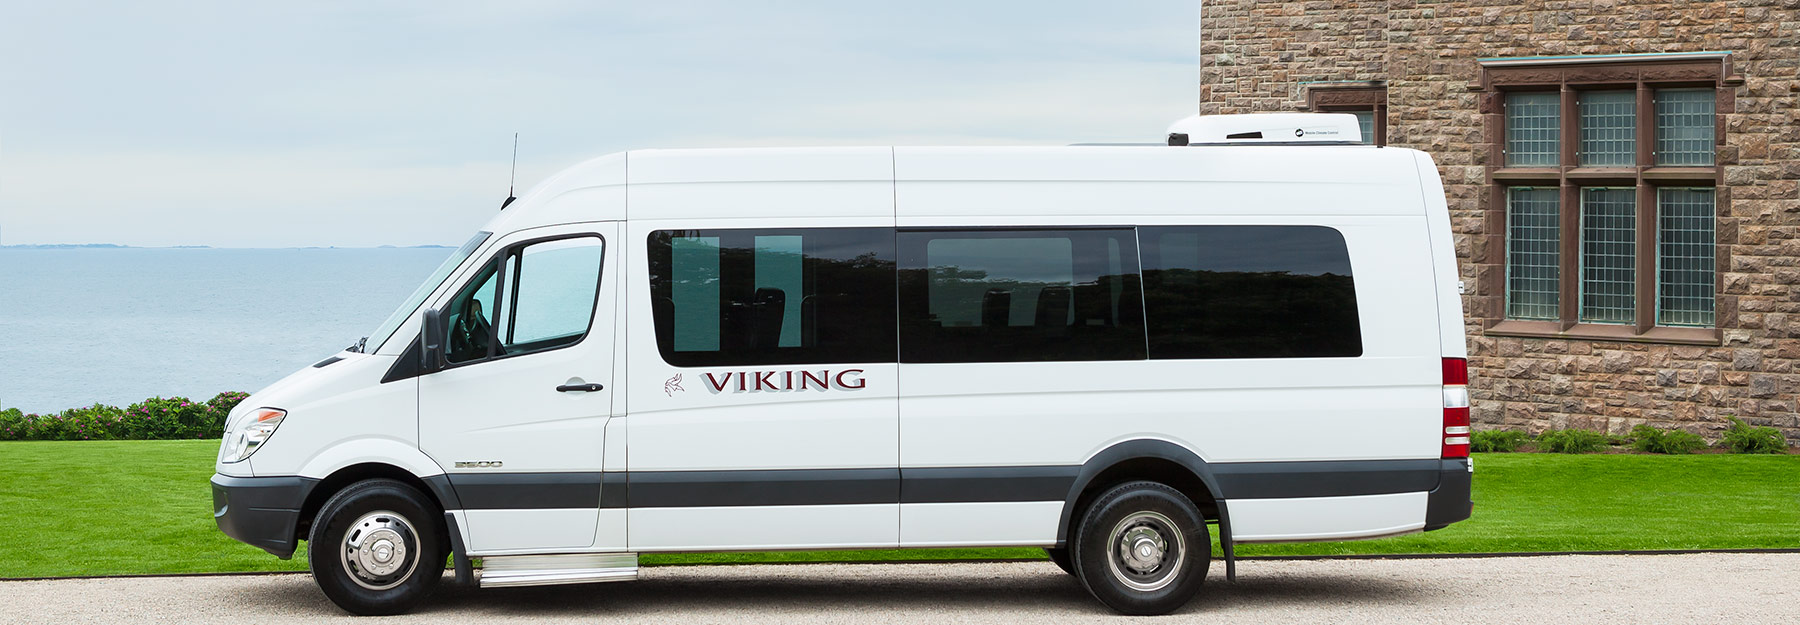 viking-tours-newport-charters-meetings-group-bus-charter